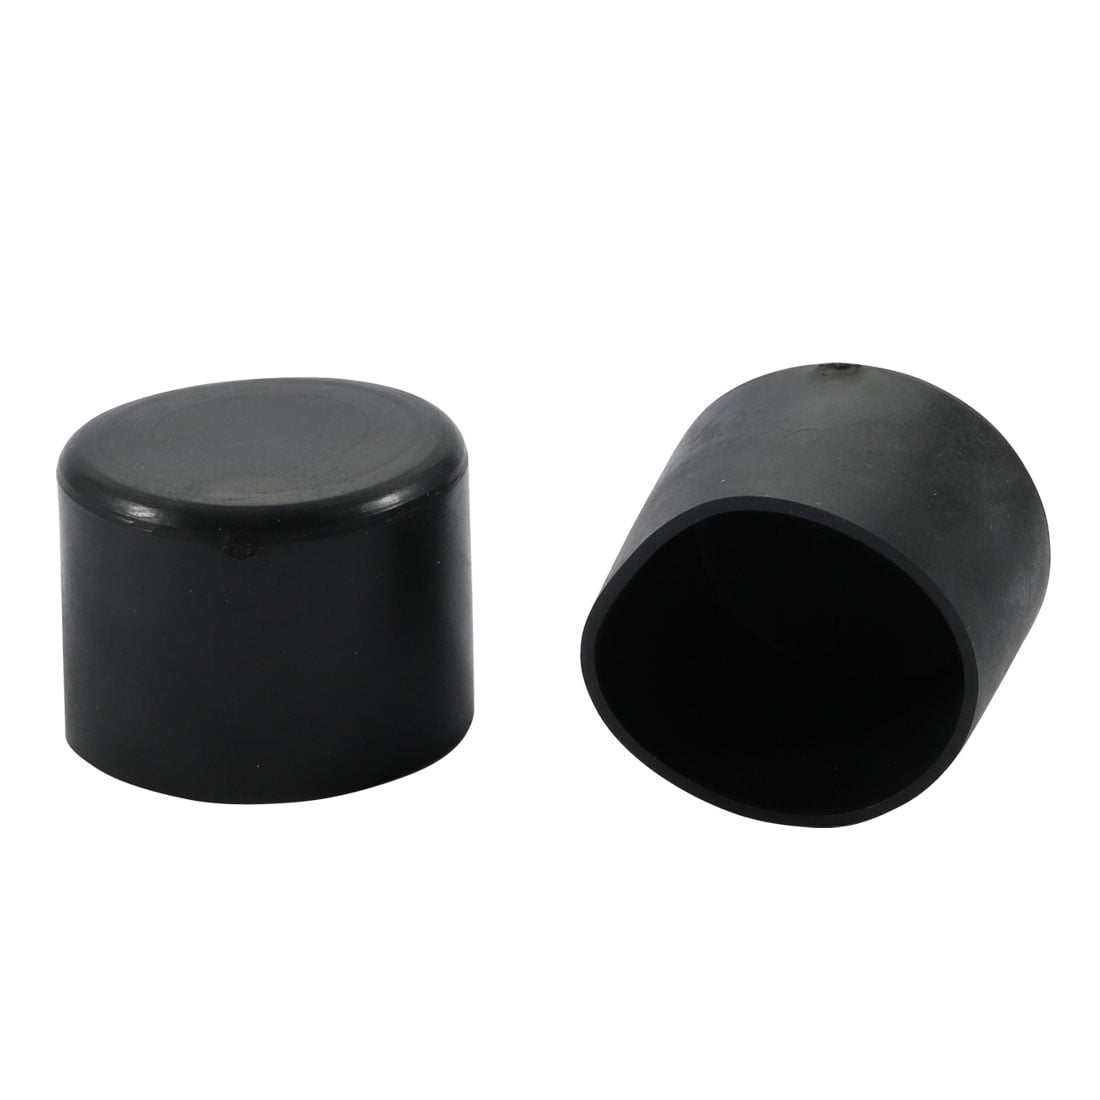 2pcs 35mm Dia Black PVC Rubber Round Plug Chair Leg Insert Caps Cover ...